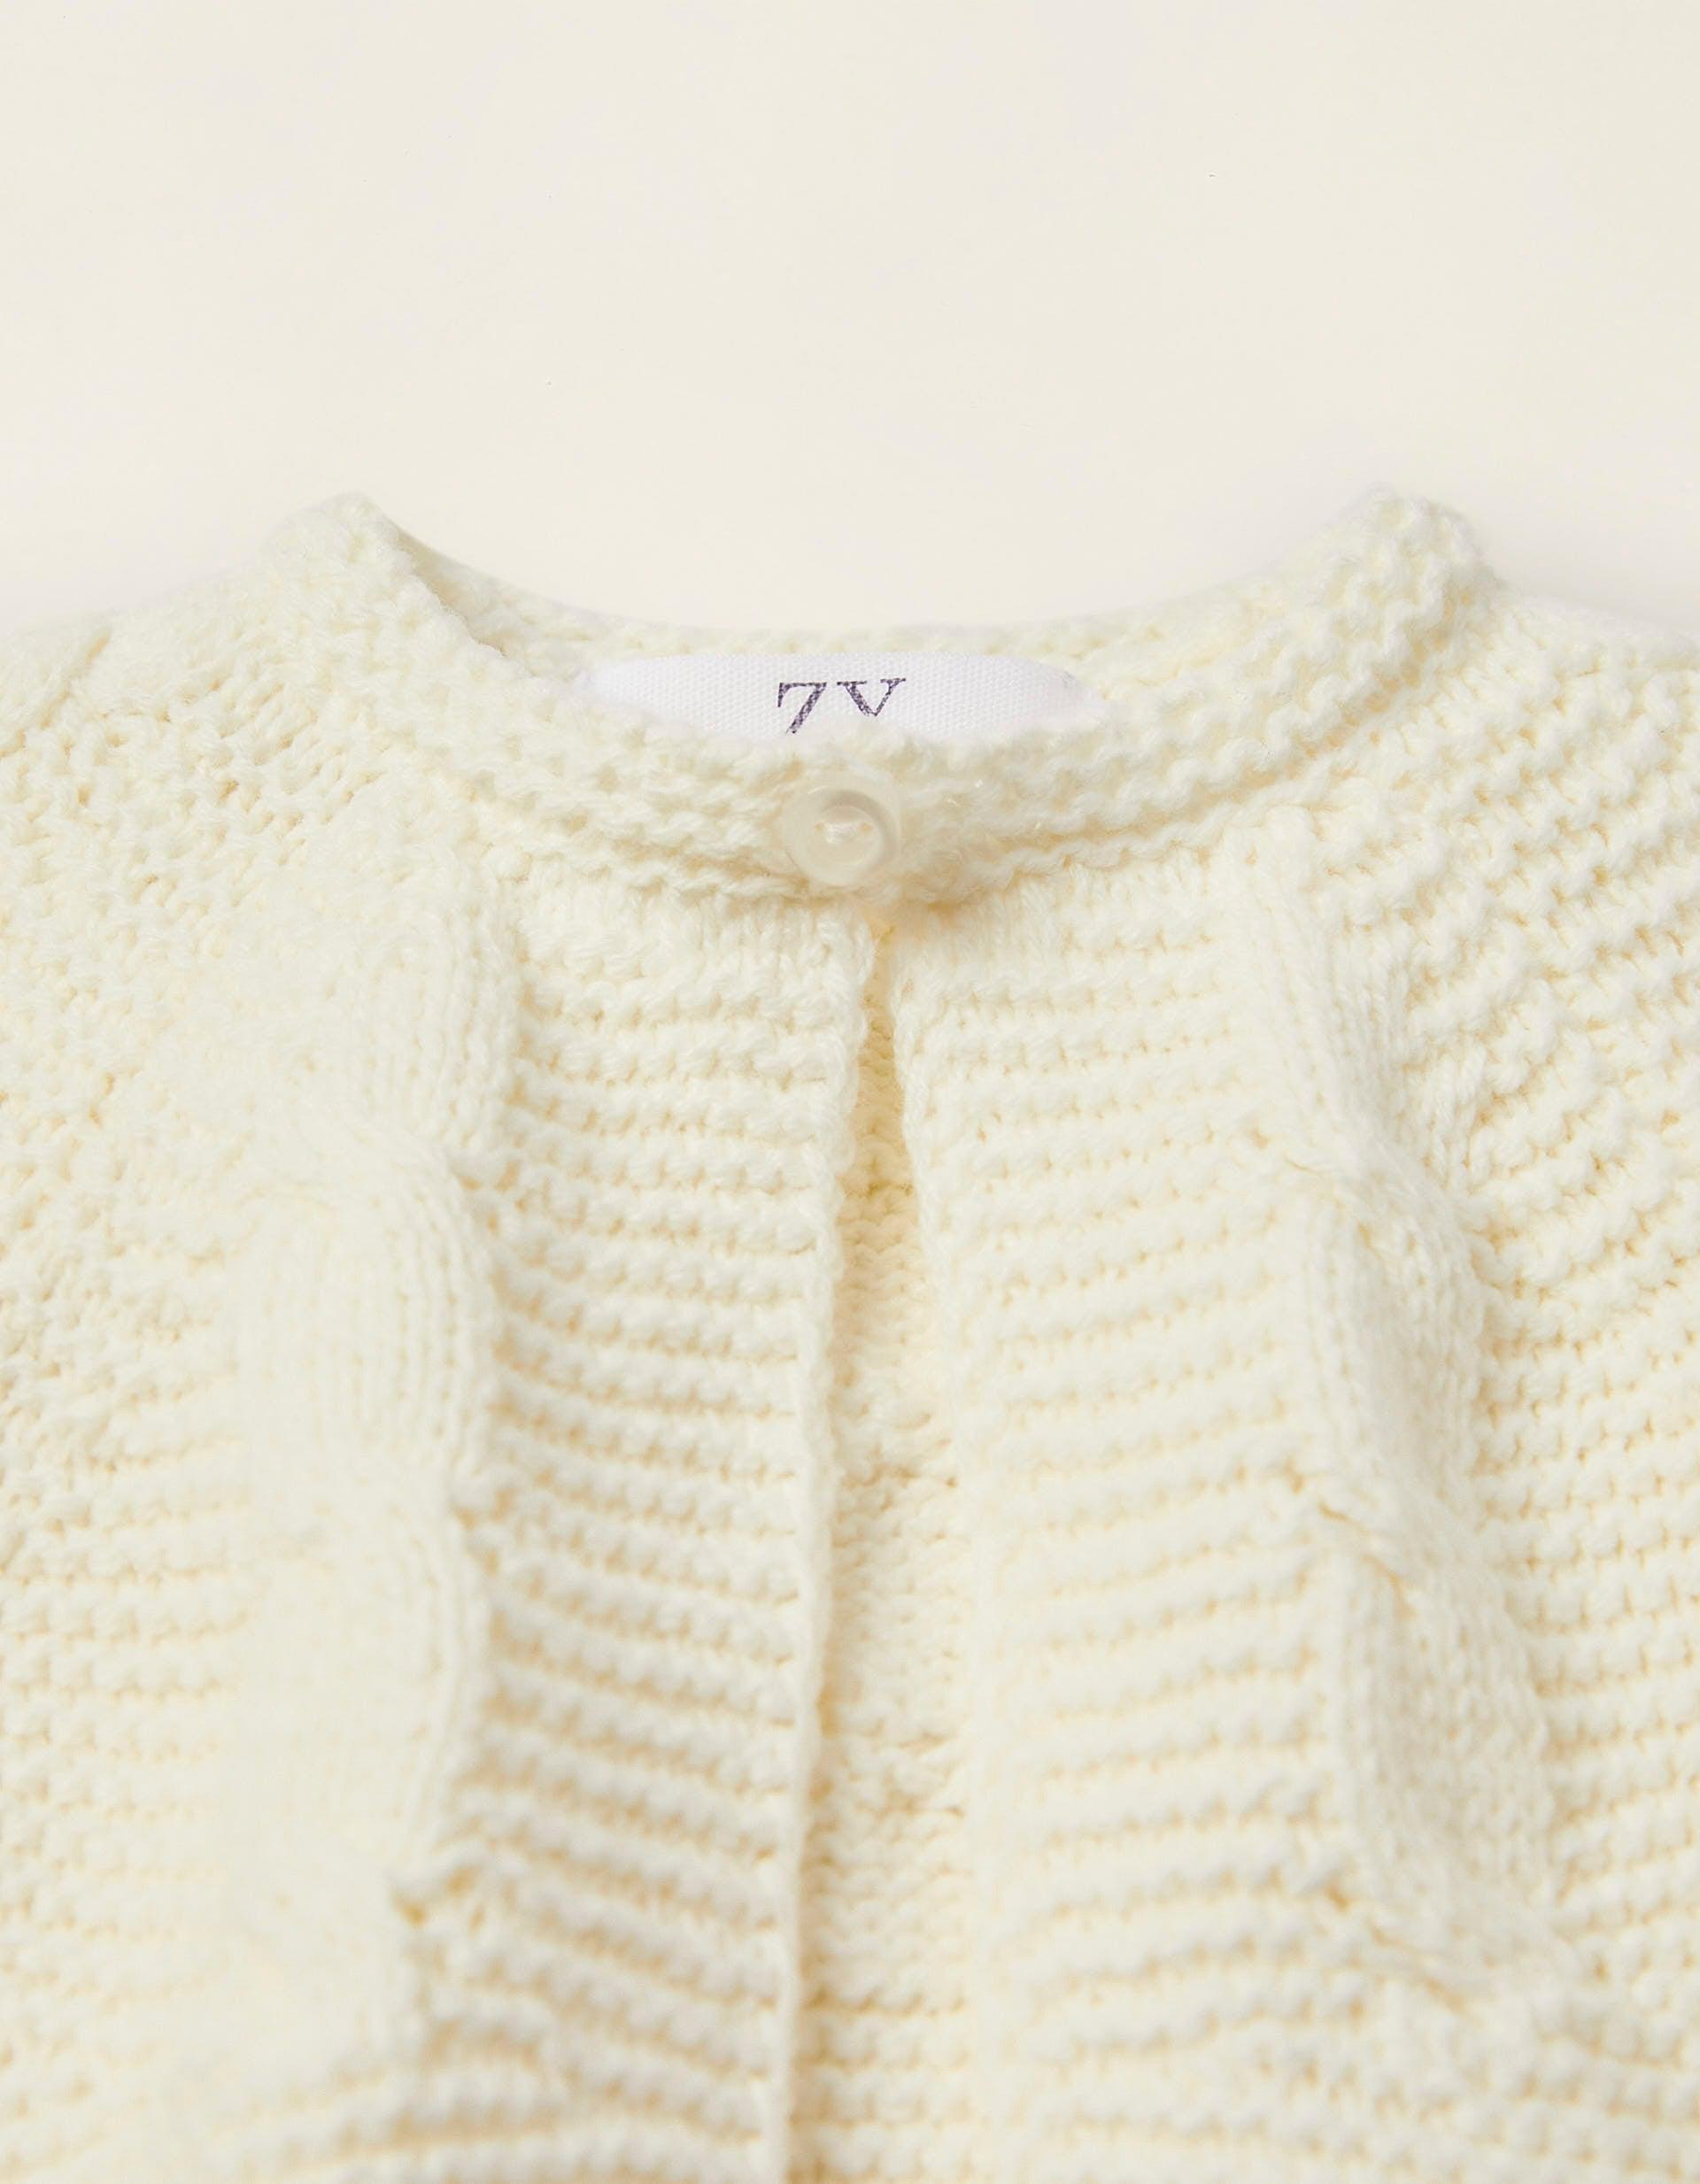 Zippy - White Knit Cardigan, Baby Girls